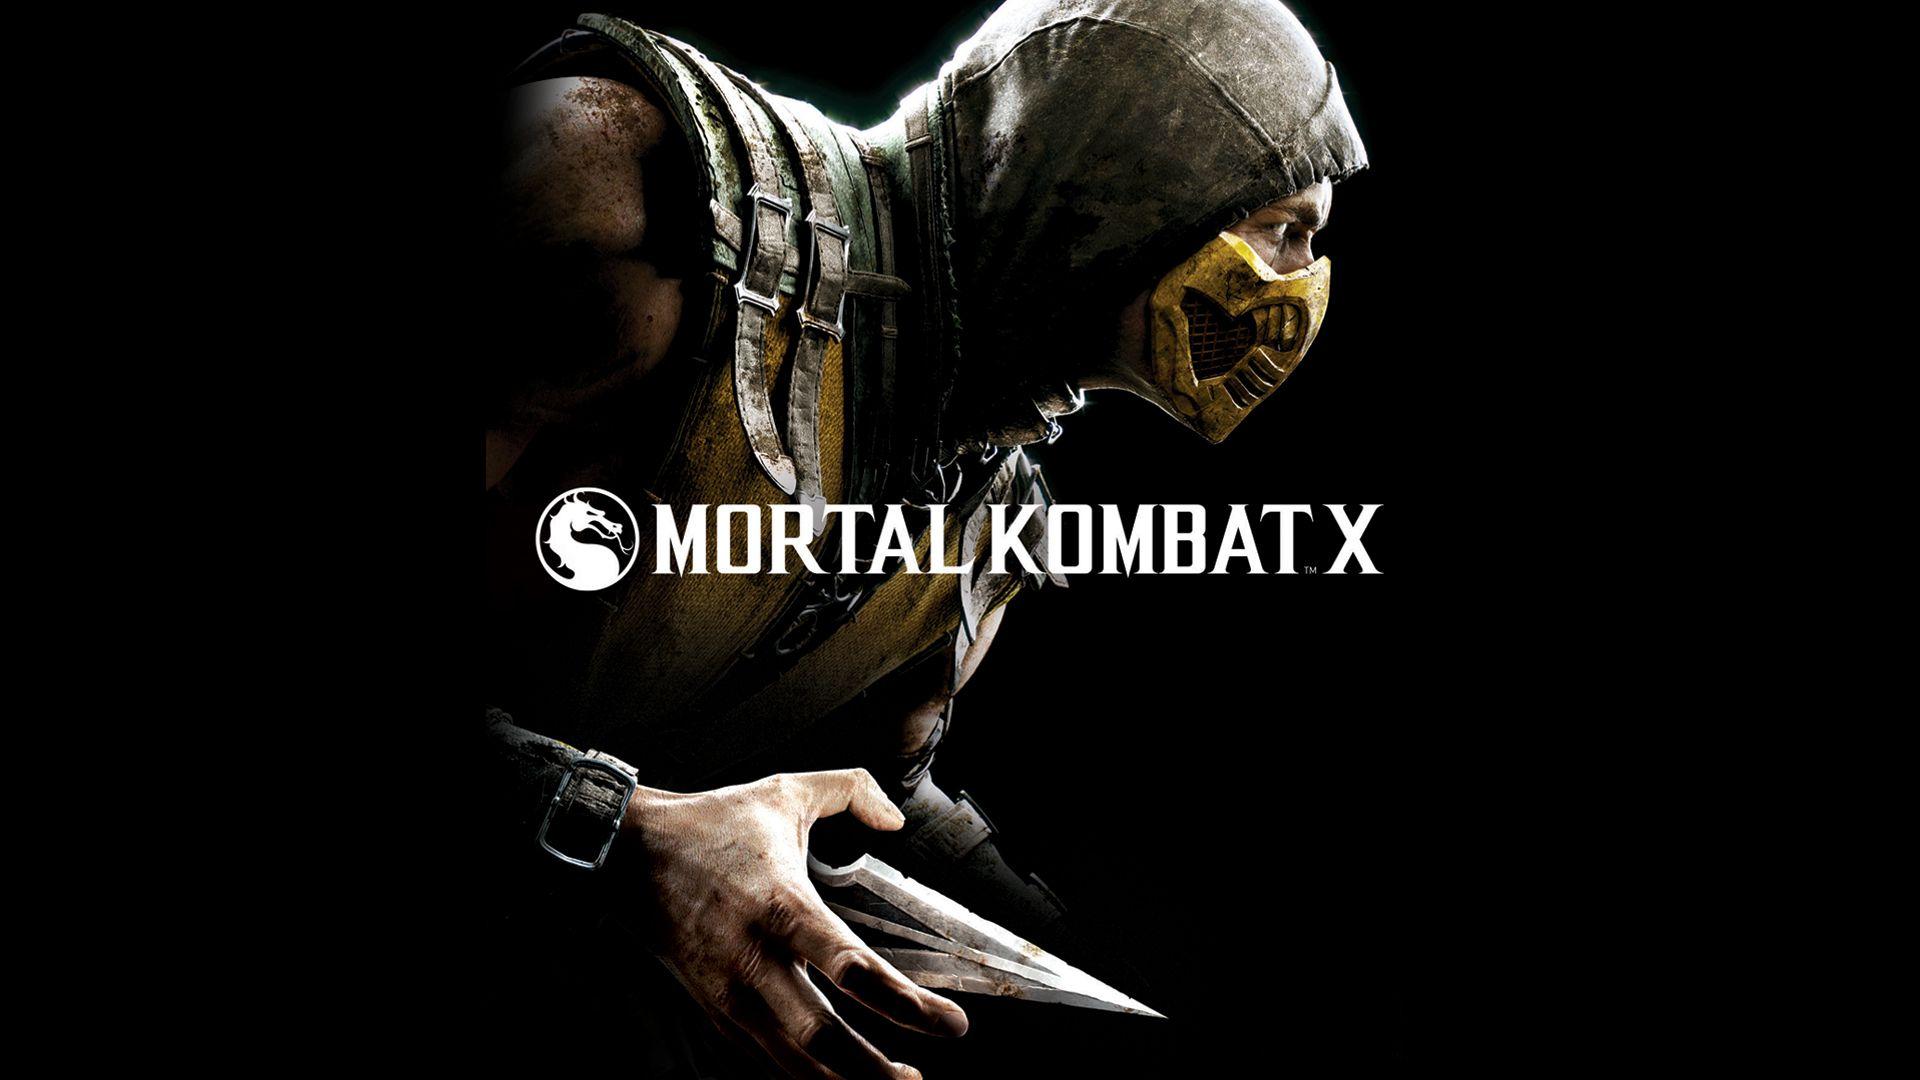 Scorpion Mortal Kombat X Game HD Wallpaper